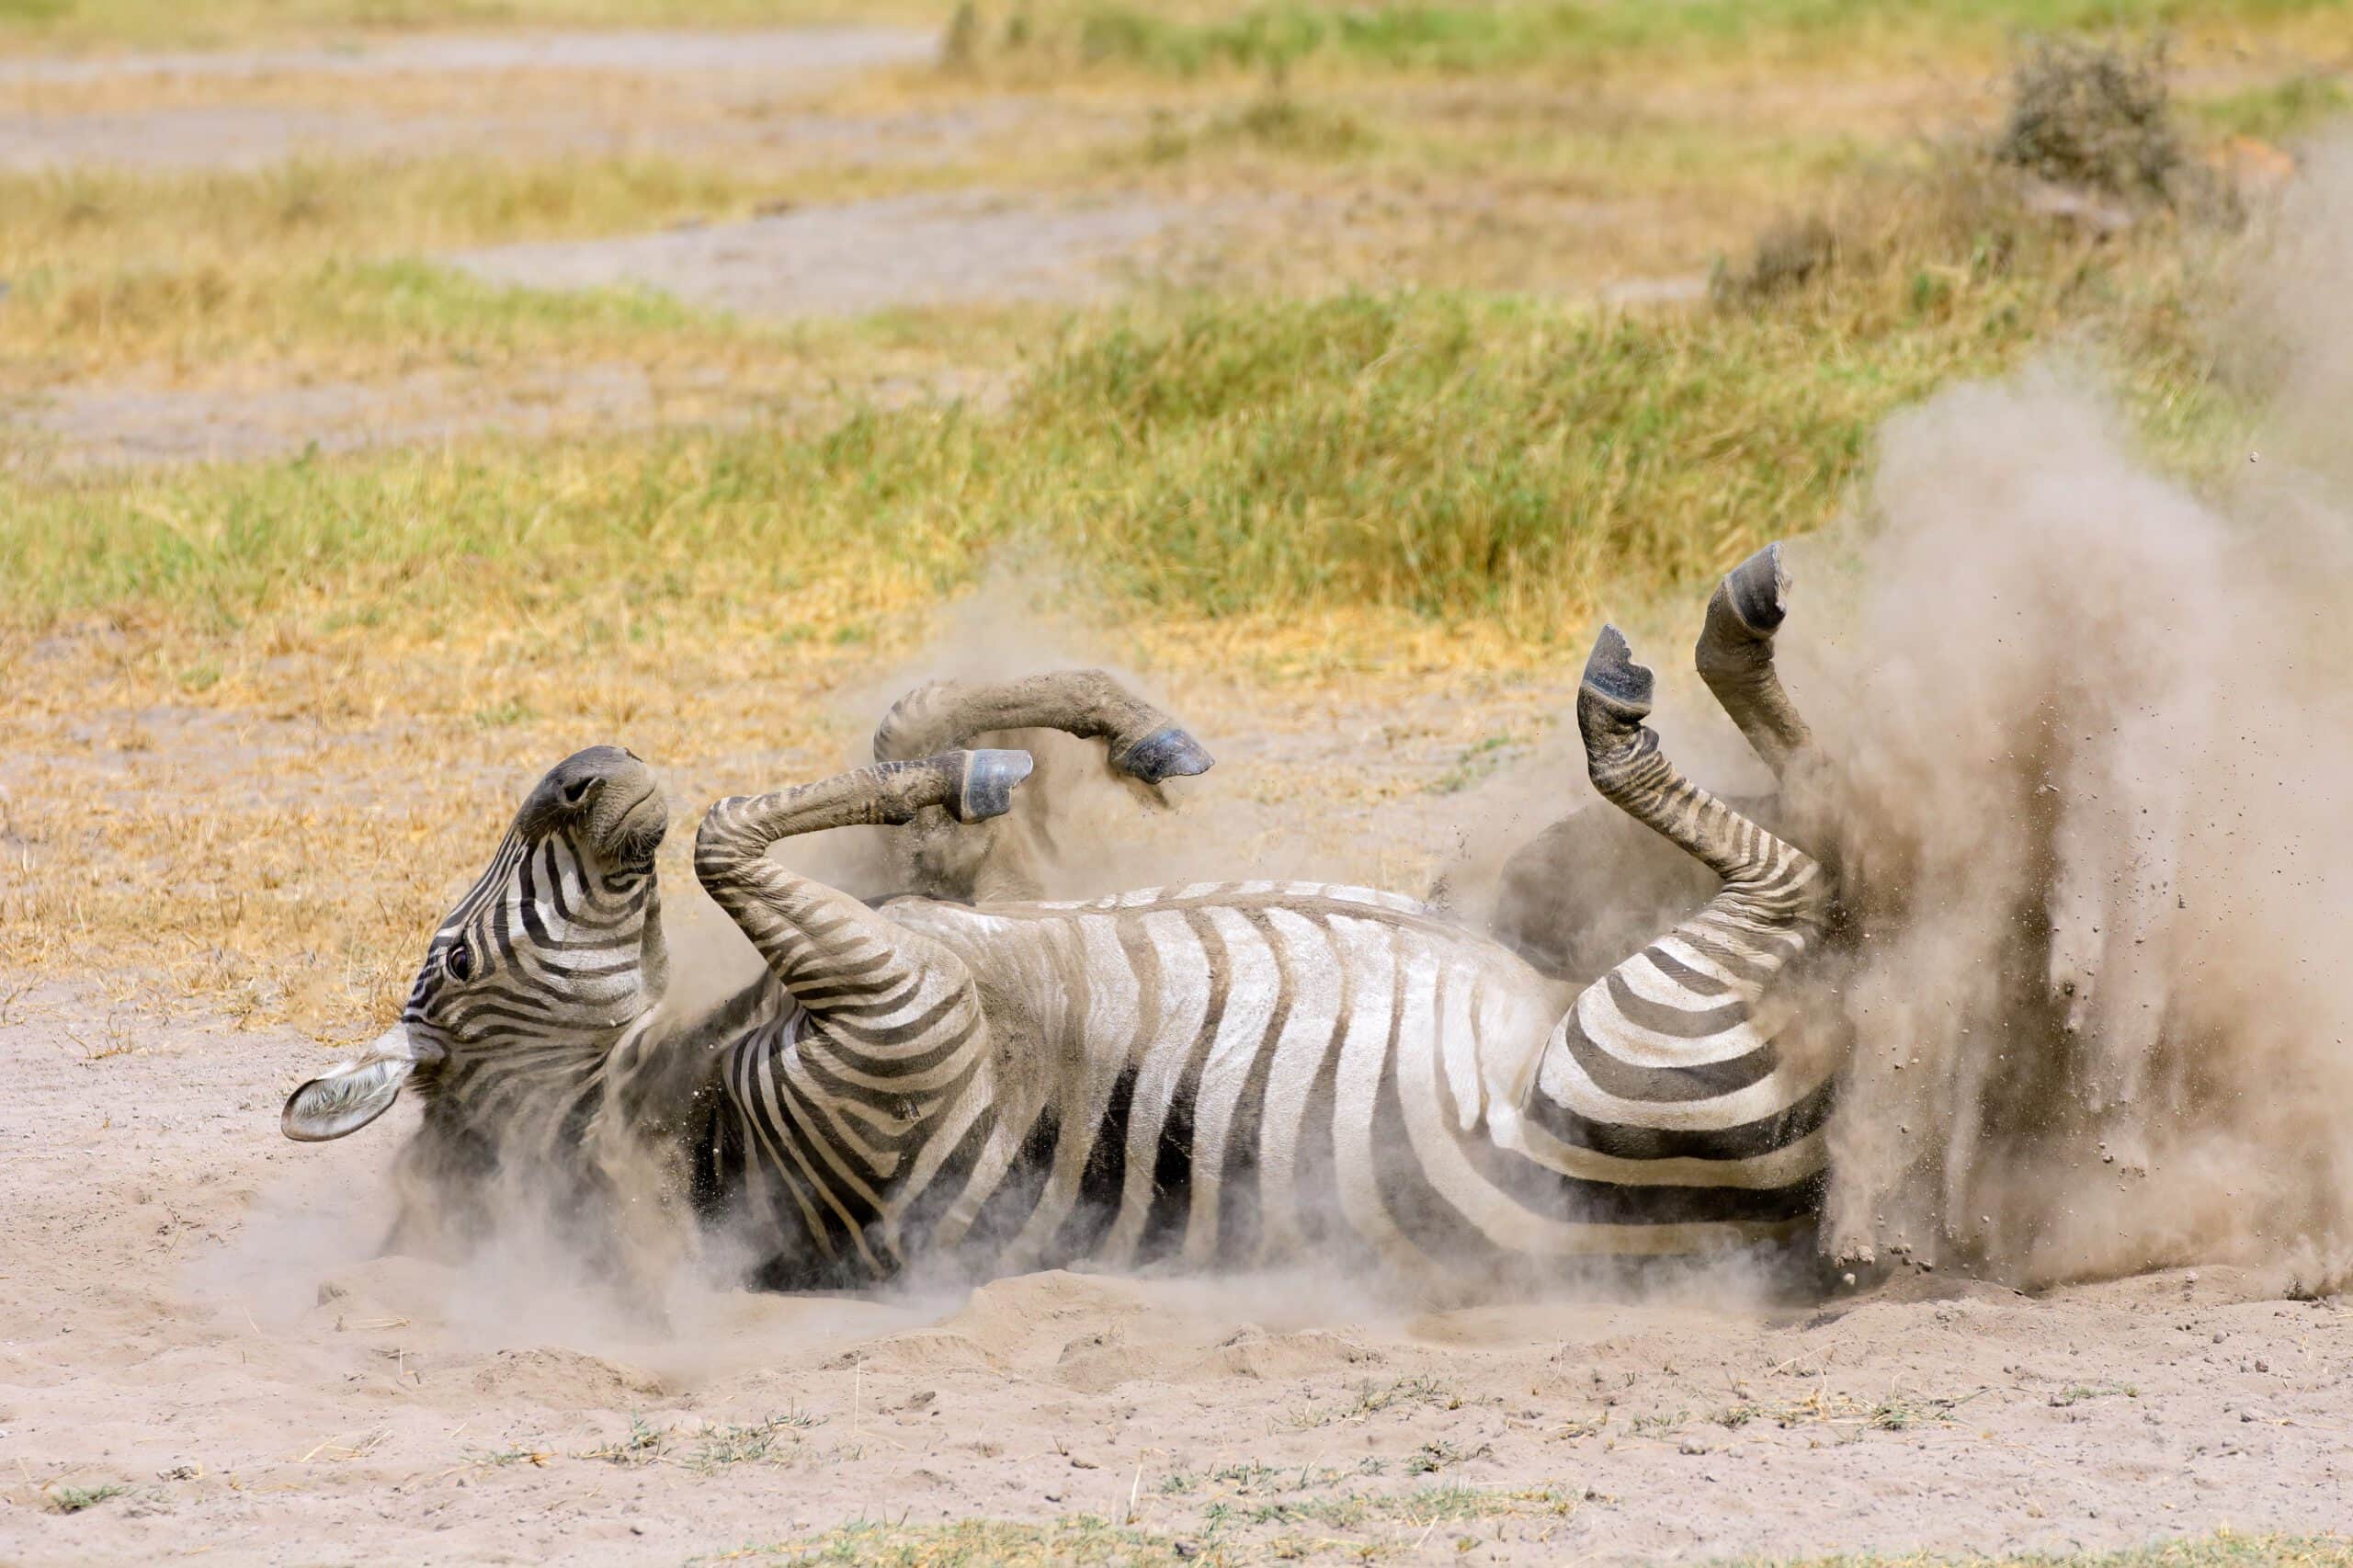 a plains zebra equus burchelli rolling in dust 2022 11 02 15 58 50 utc scaled